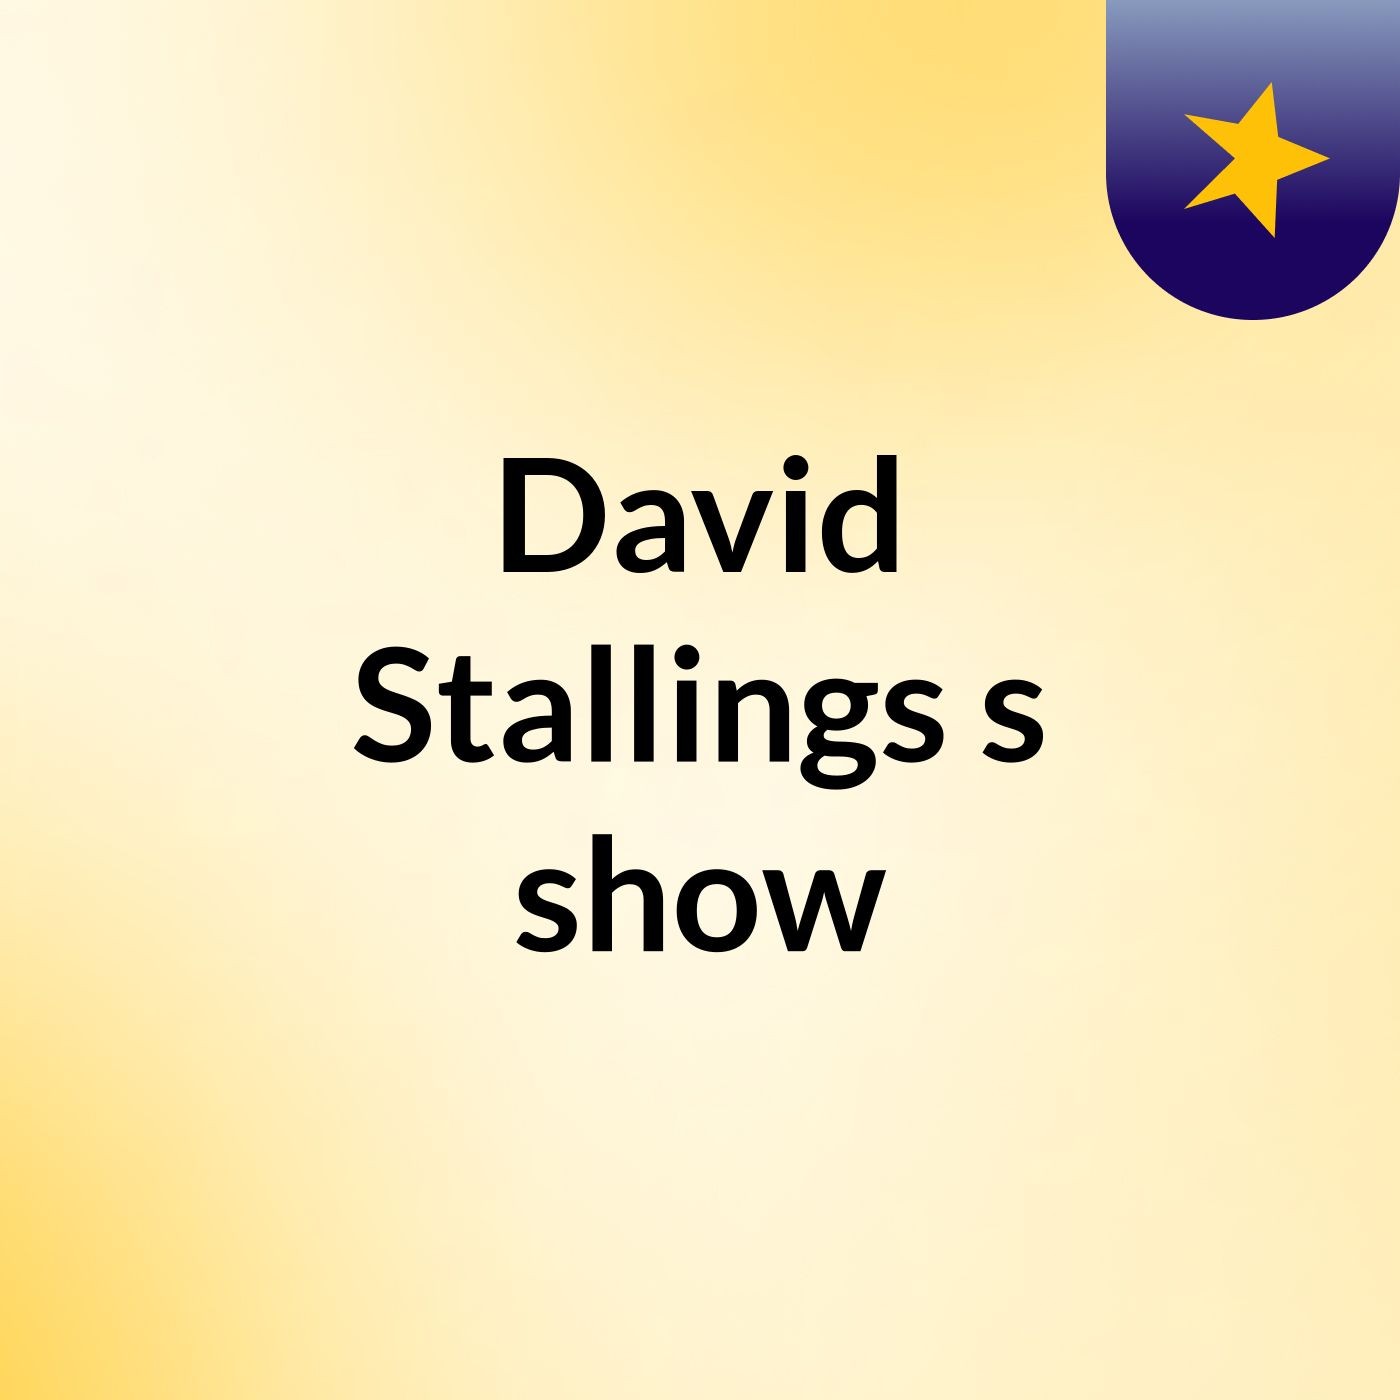 David Stallings's show